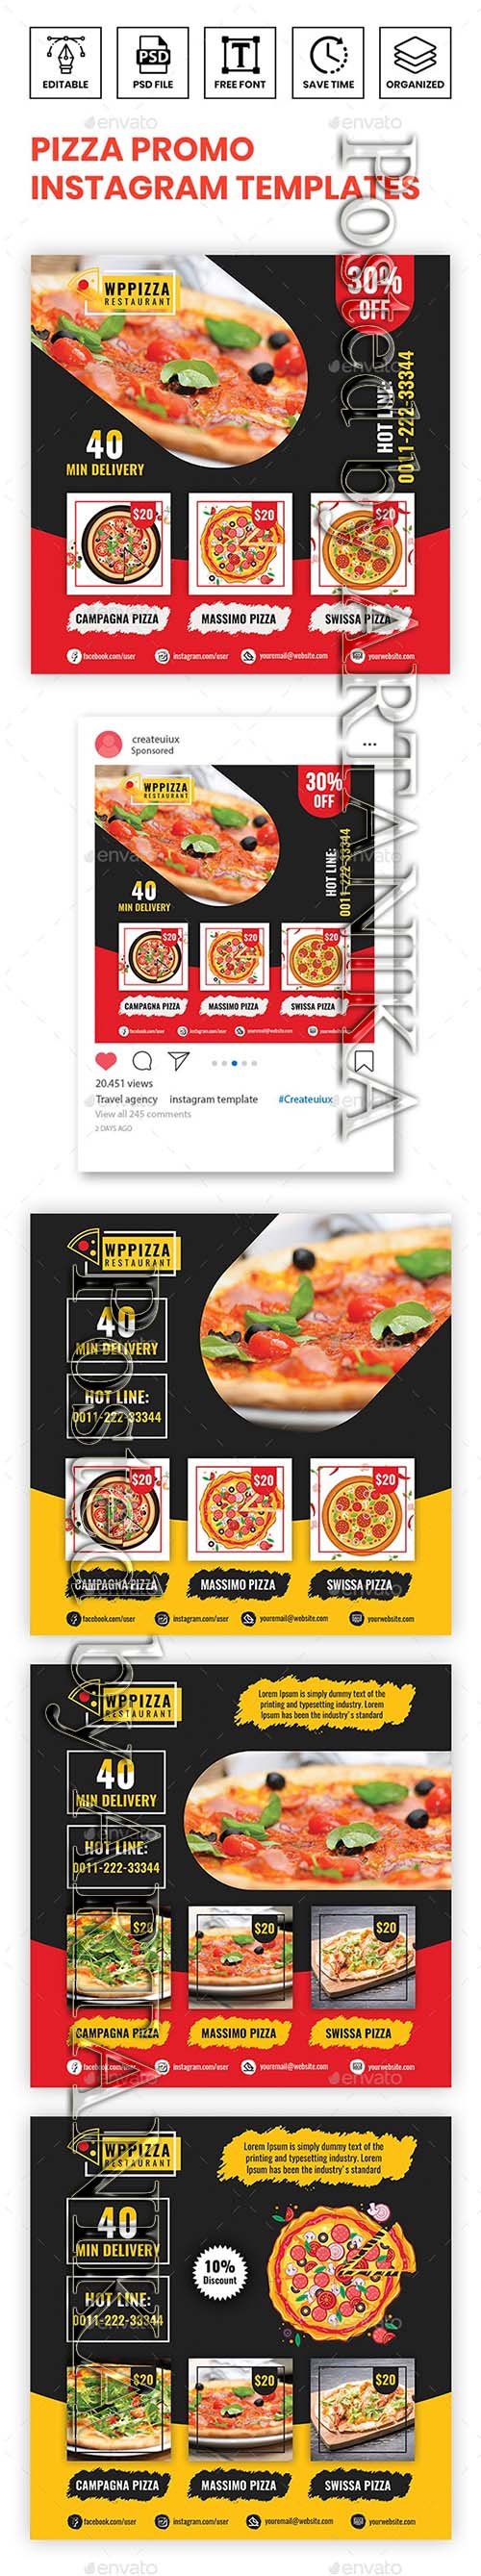 Pizza Promo Instagram Templates 23844901